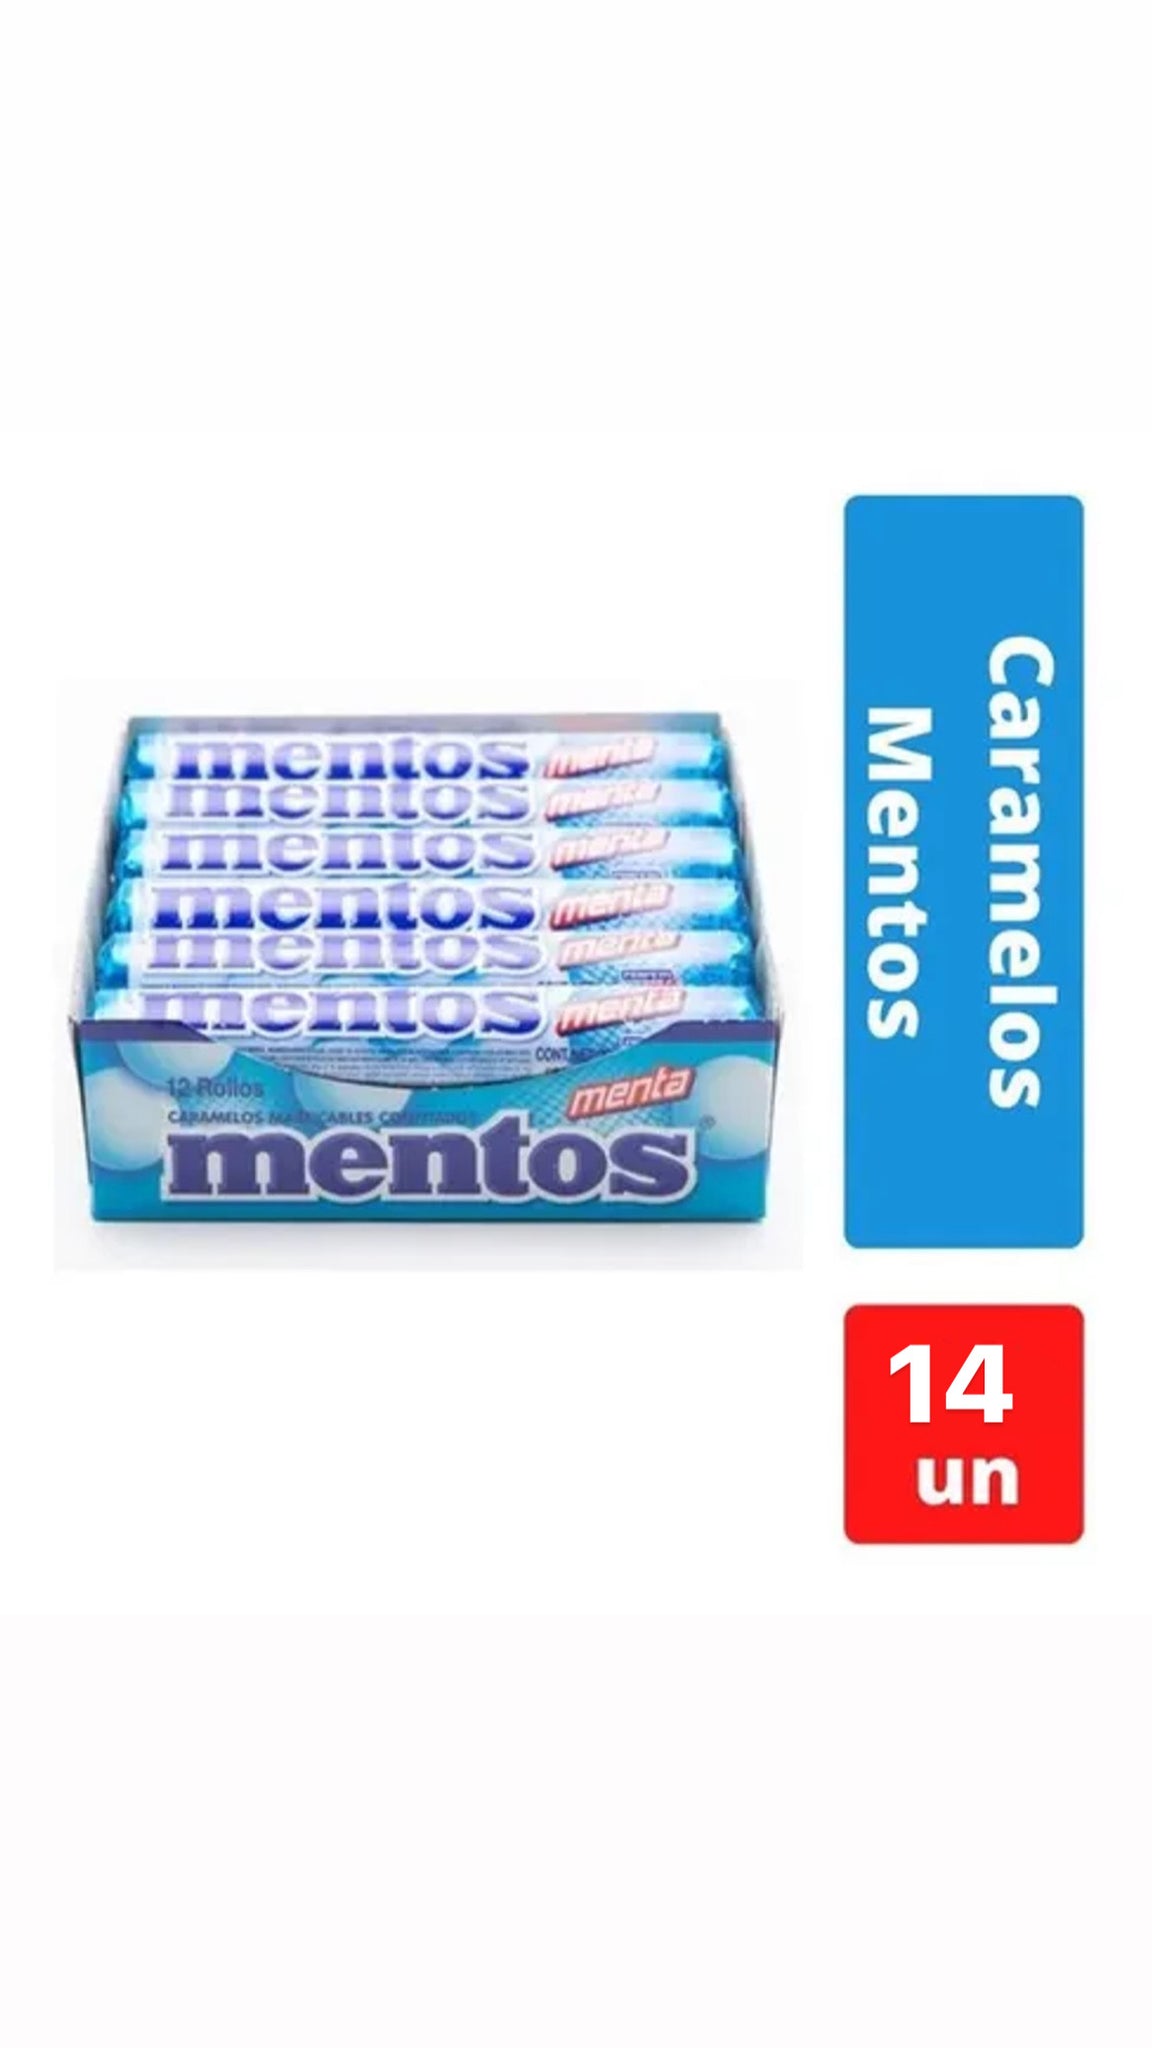 Mentos (14uni)